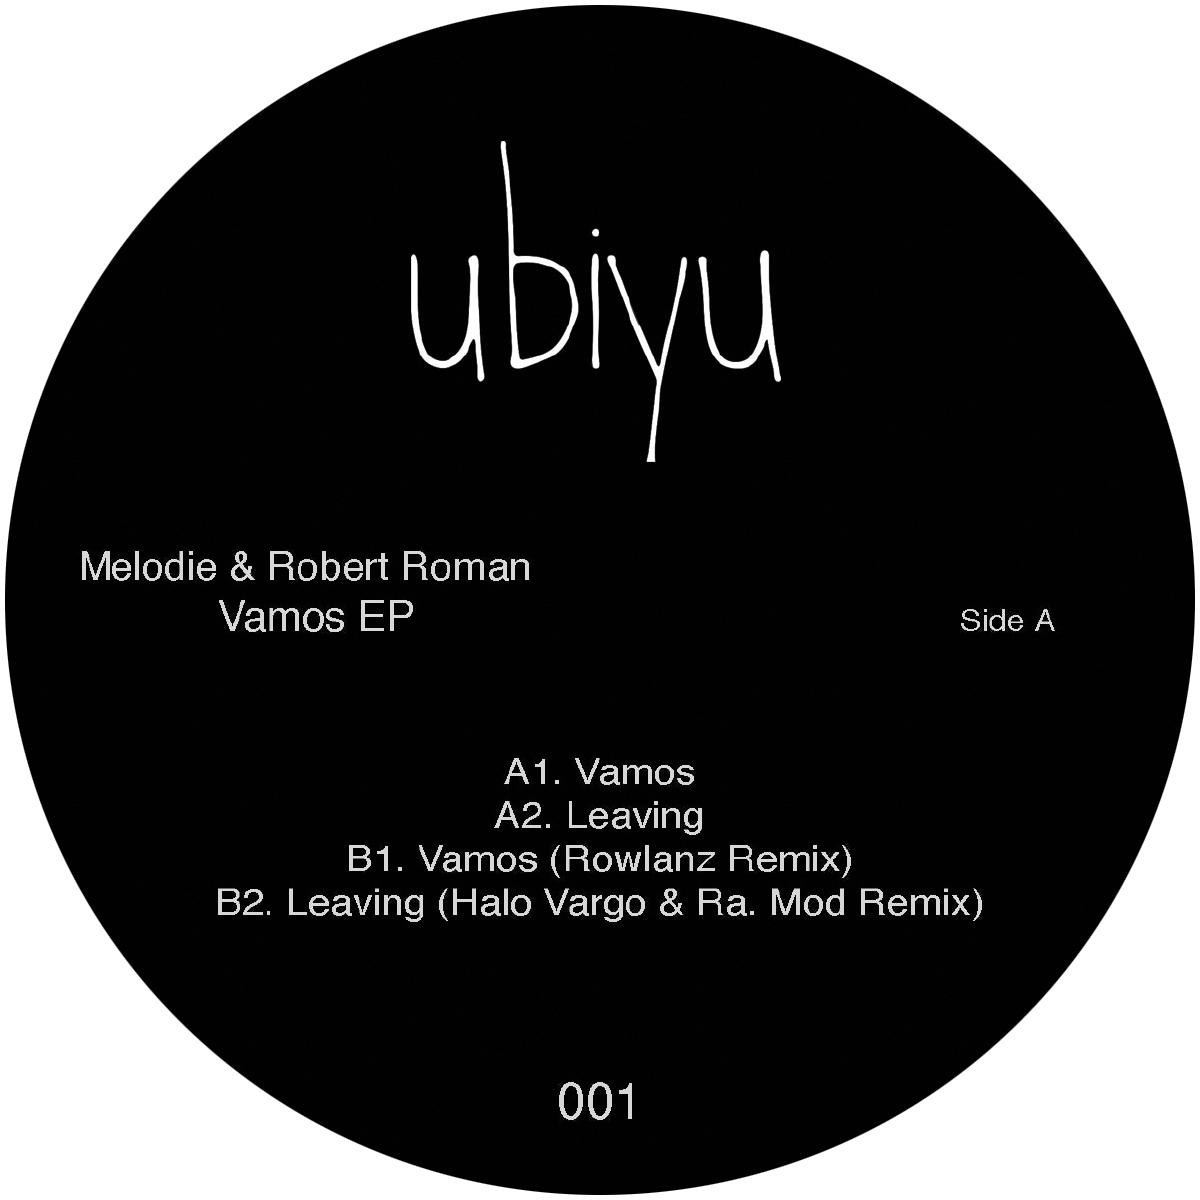 Melodie/Robert Roman - Vamos EP - UBU001 - UBIYU